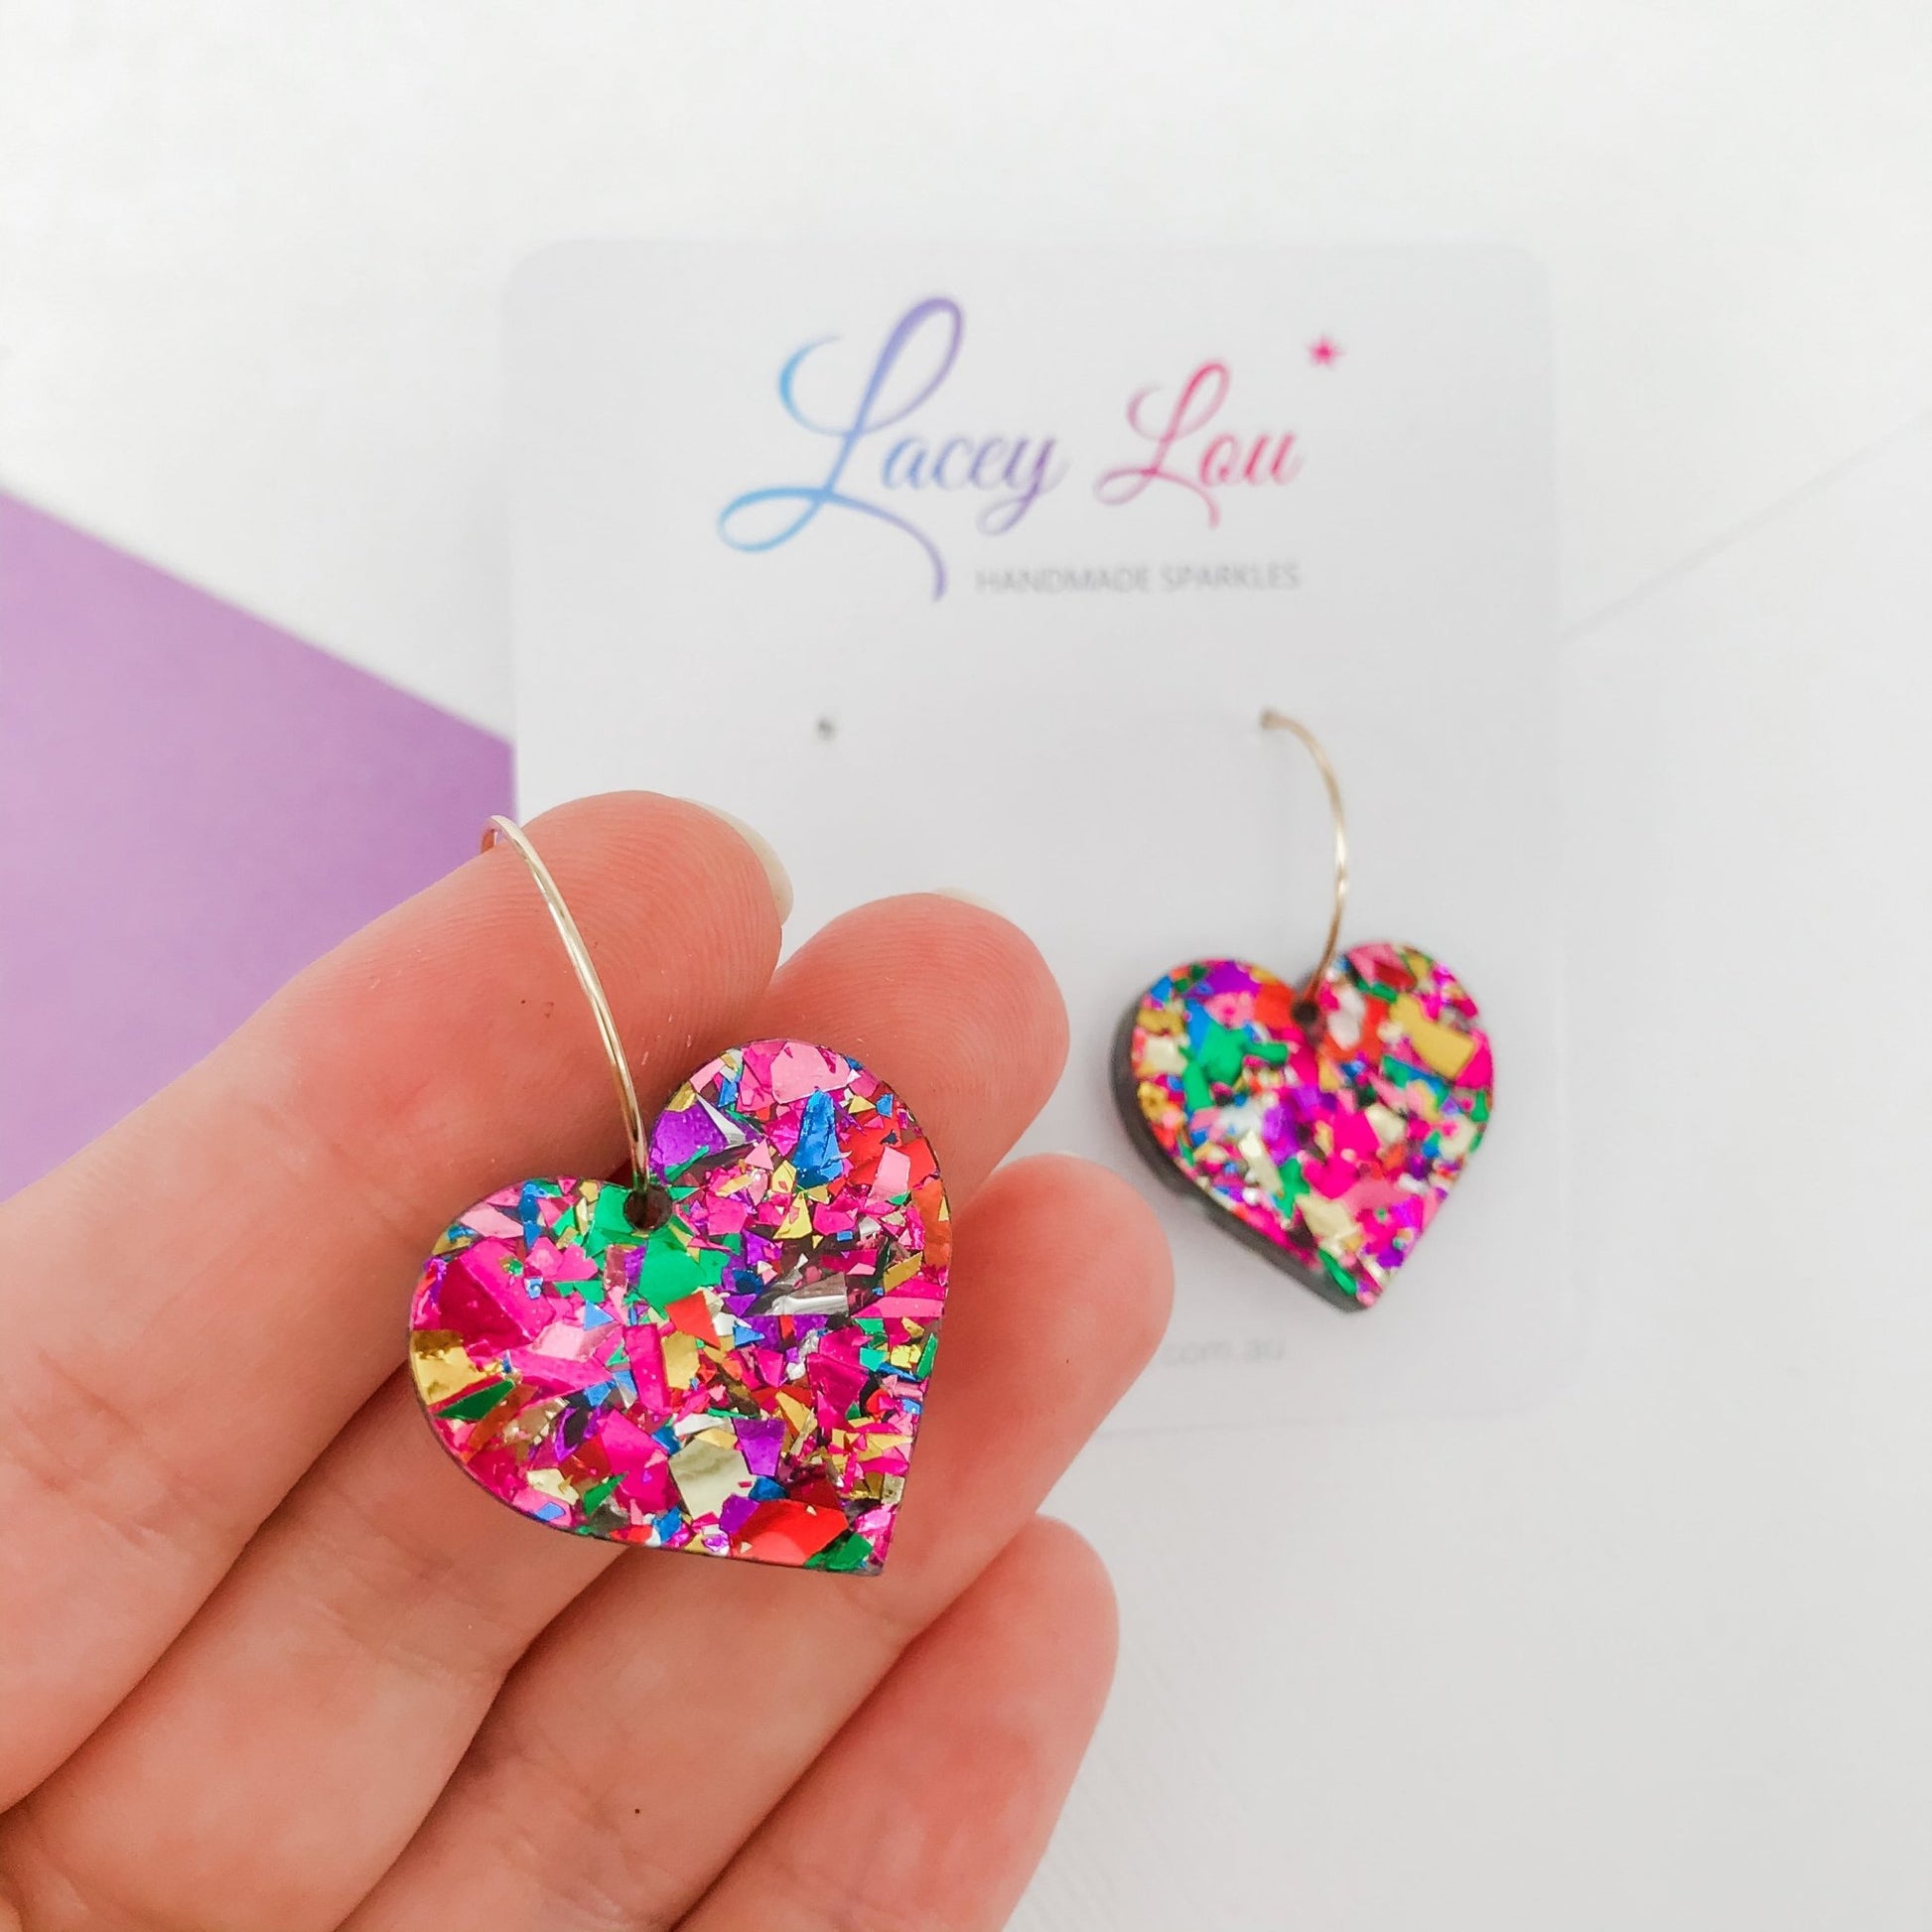 Love Heart Hoop Earrings - Rainbow Glitter - Lacey Lou Sparkles